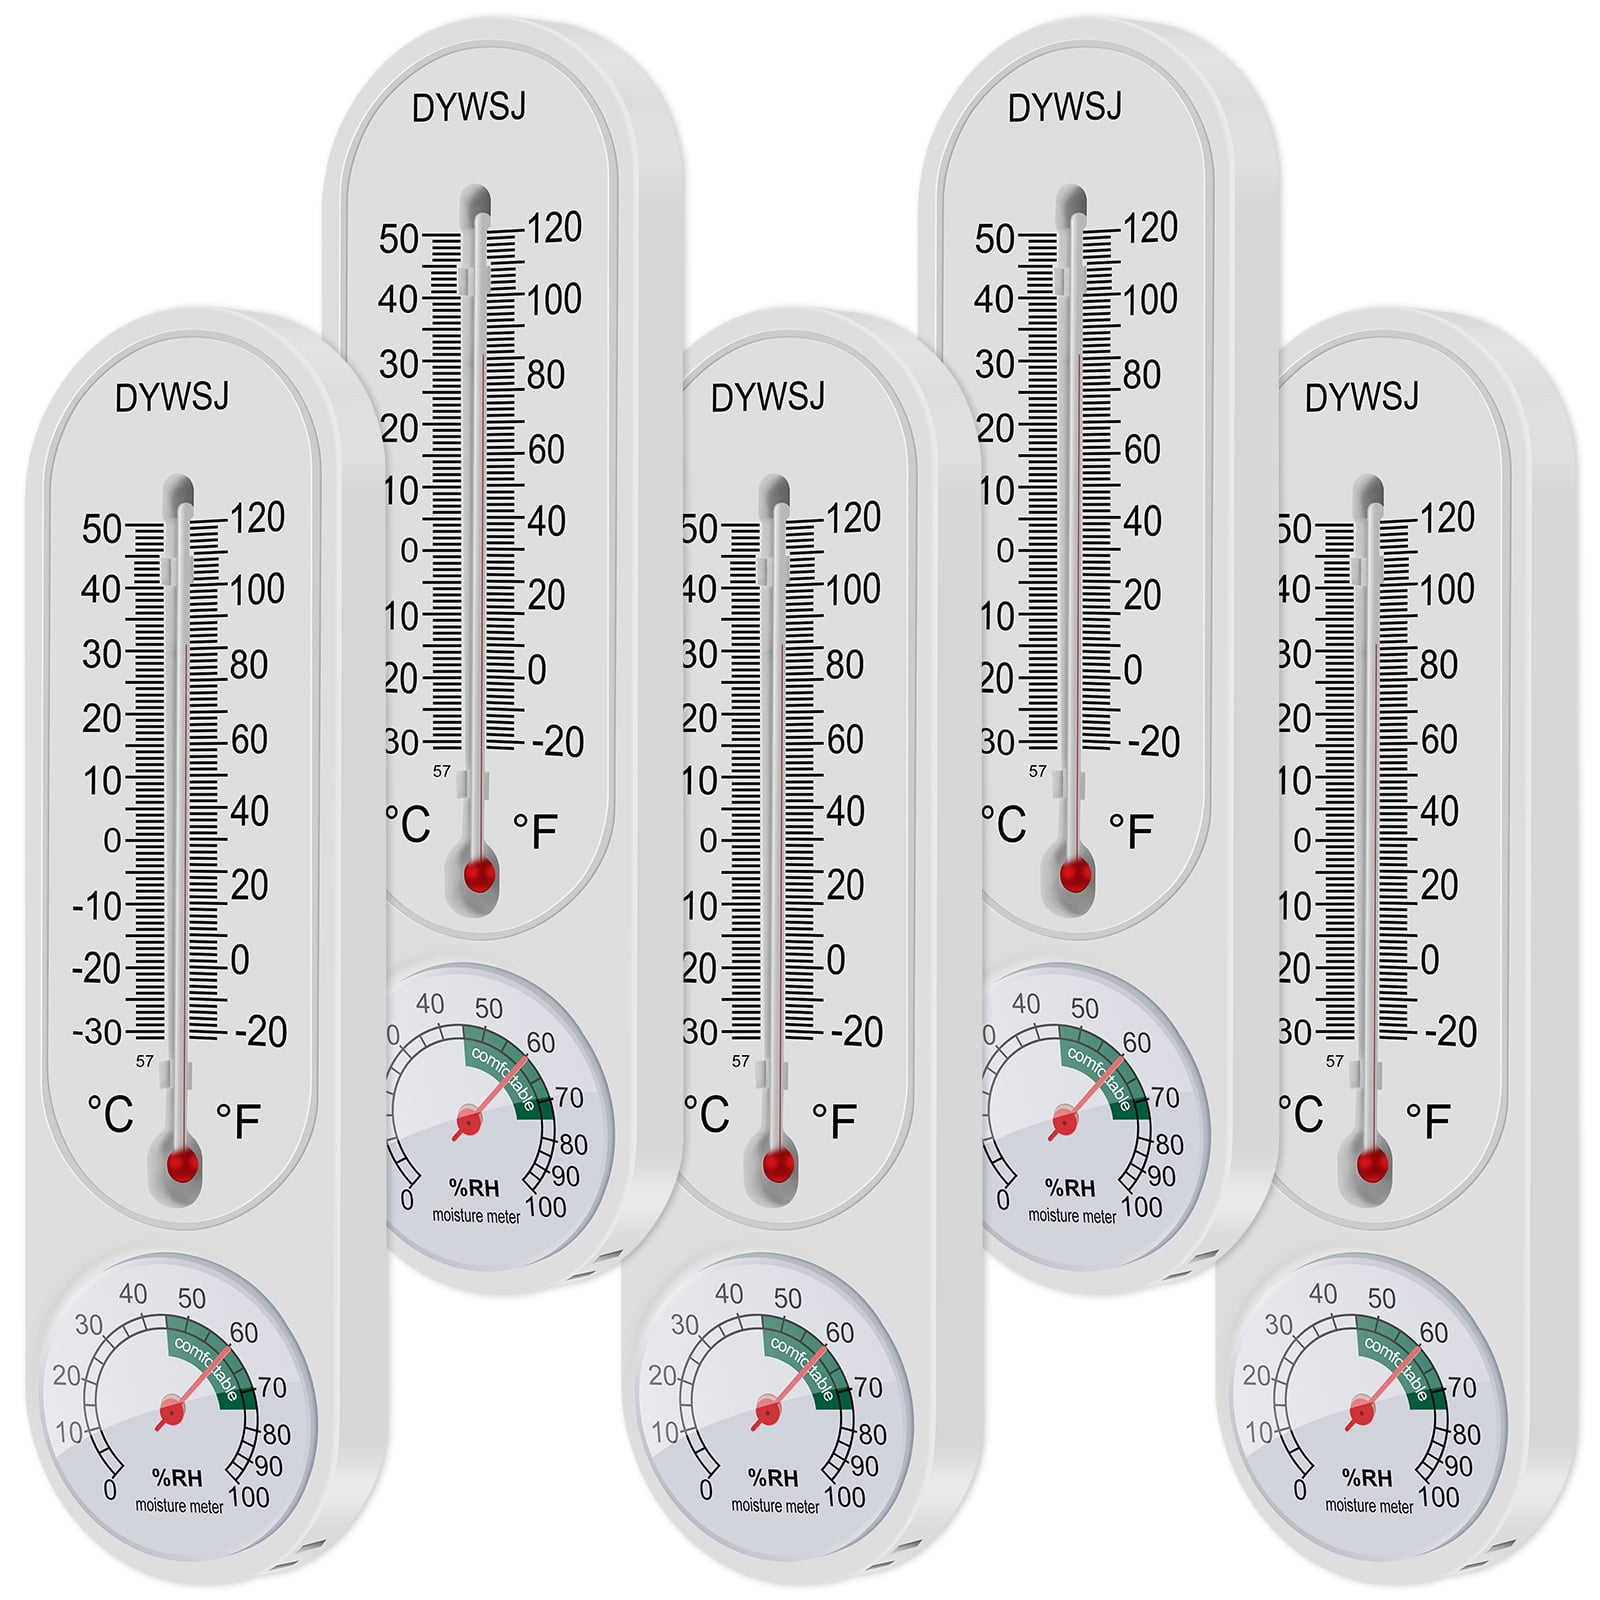 Indoor Outdoor Thermometer Wall Humidity Meter Vertical Hygrometer Wireless Temperature Gauge Fahrenheit Celsius Patio Garden 60ee4f9d D059 4fb4 99da Cd09eed0efb8.63260ca6e607134d3a617e12f69e1943 